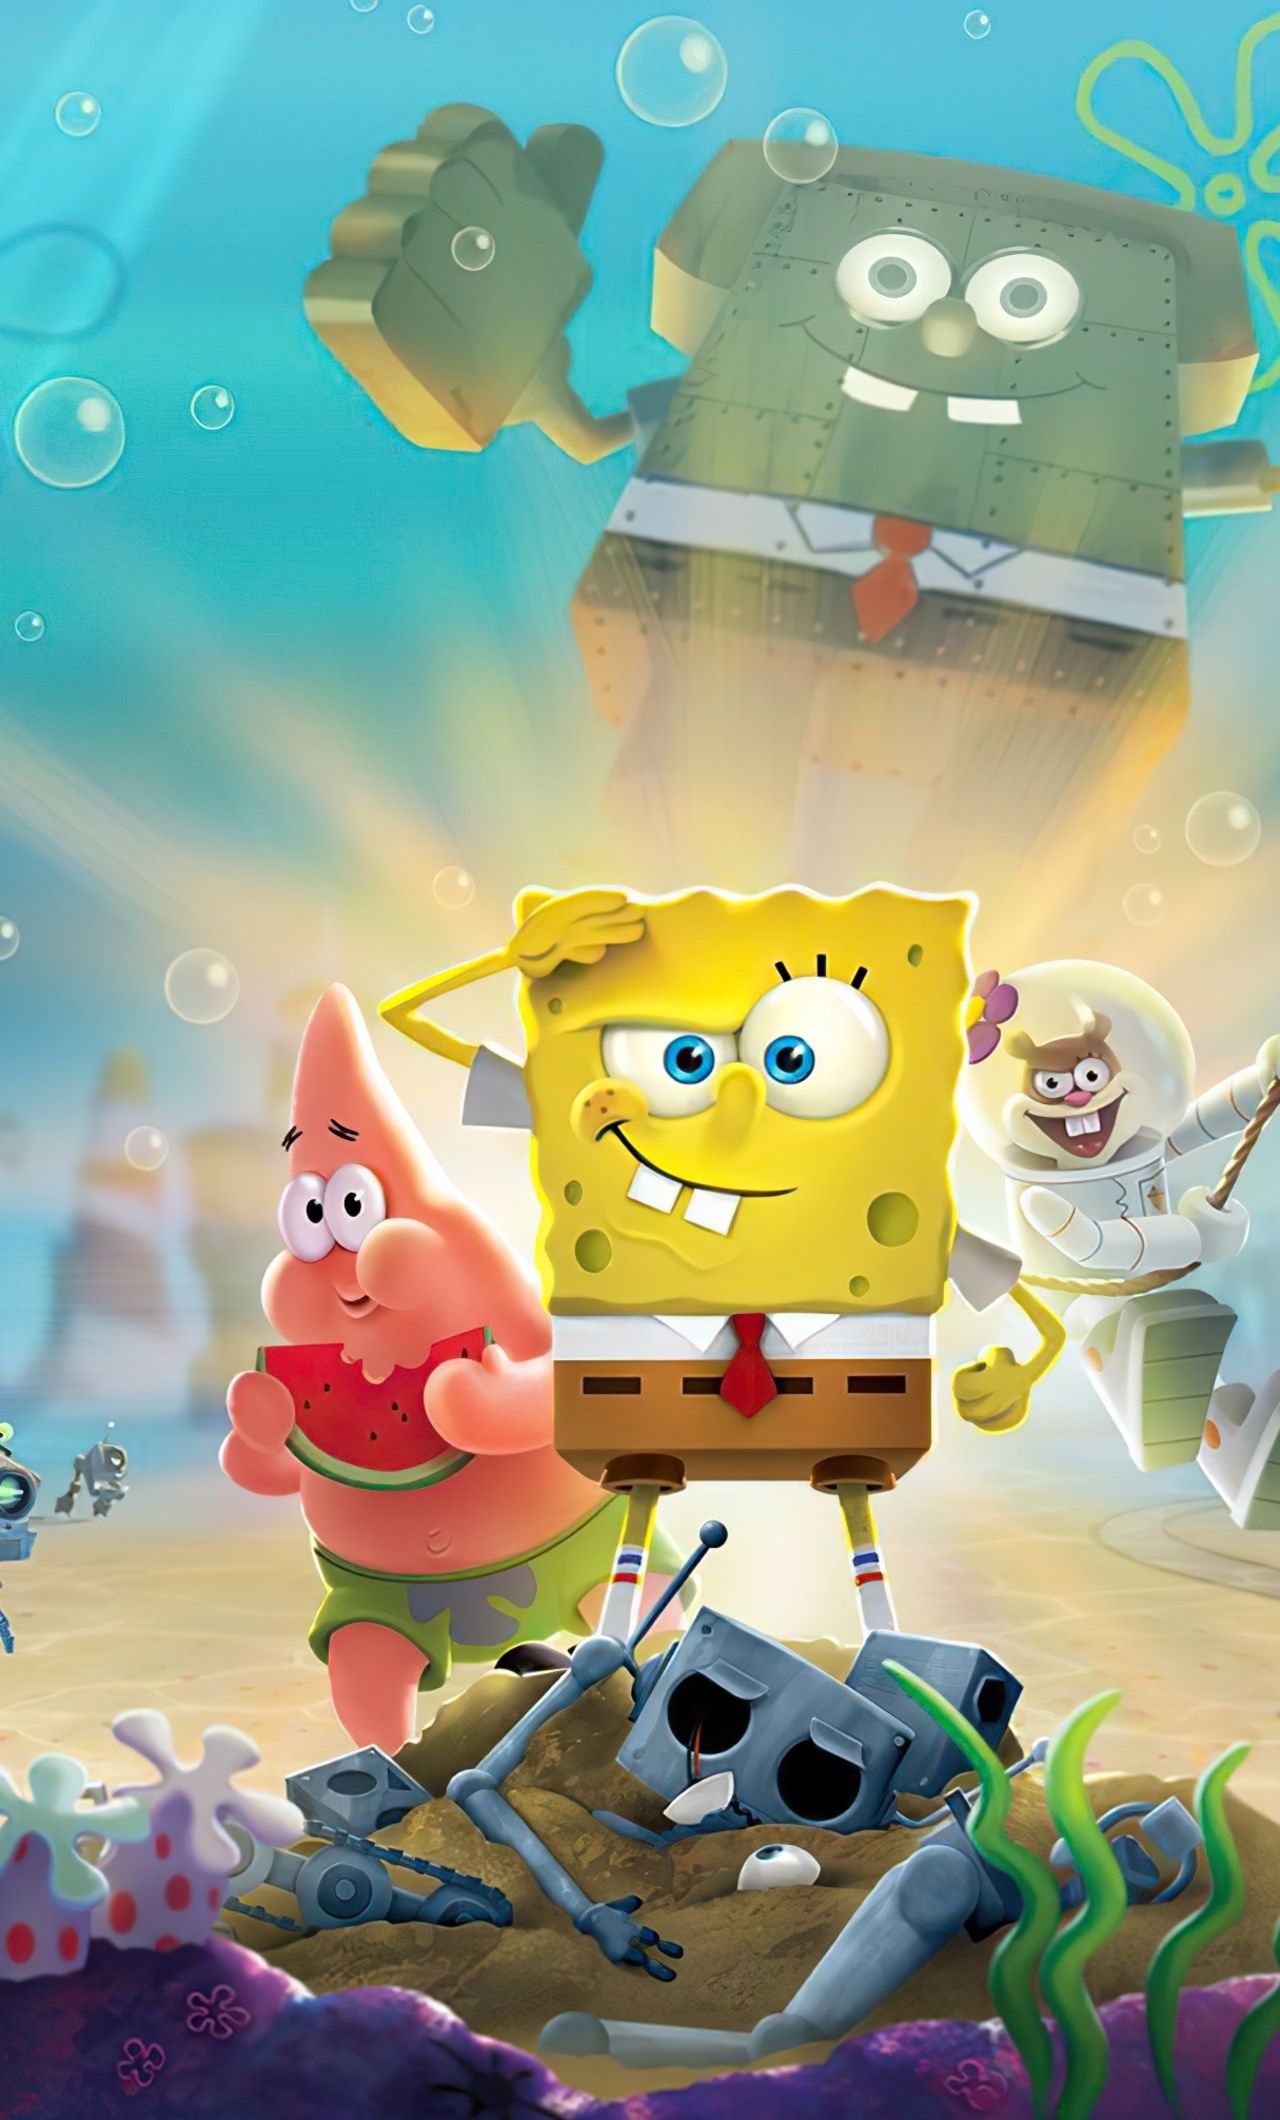 SpongeBob SquarePants Battle For Bikini Bottom Rehydrated iPhone HD 4k Wallpaper, Image, Background, Photo and Picture